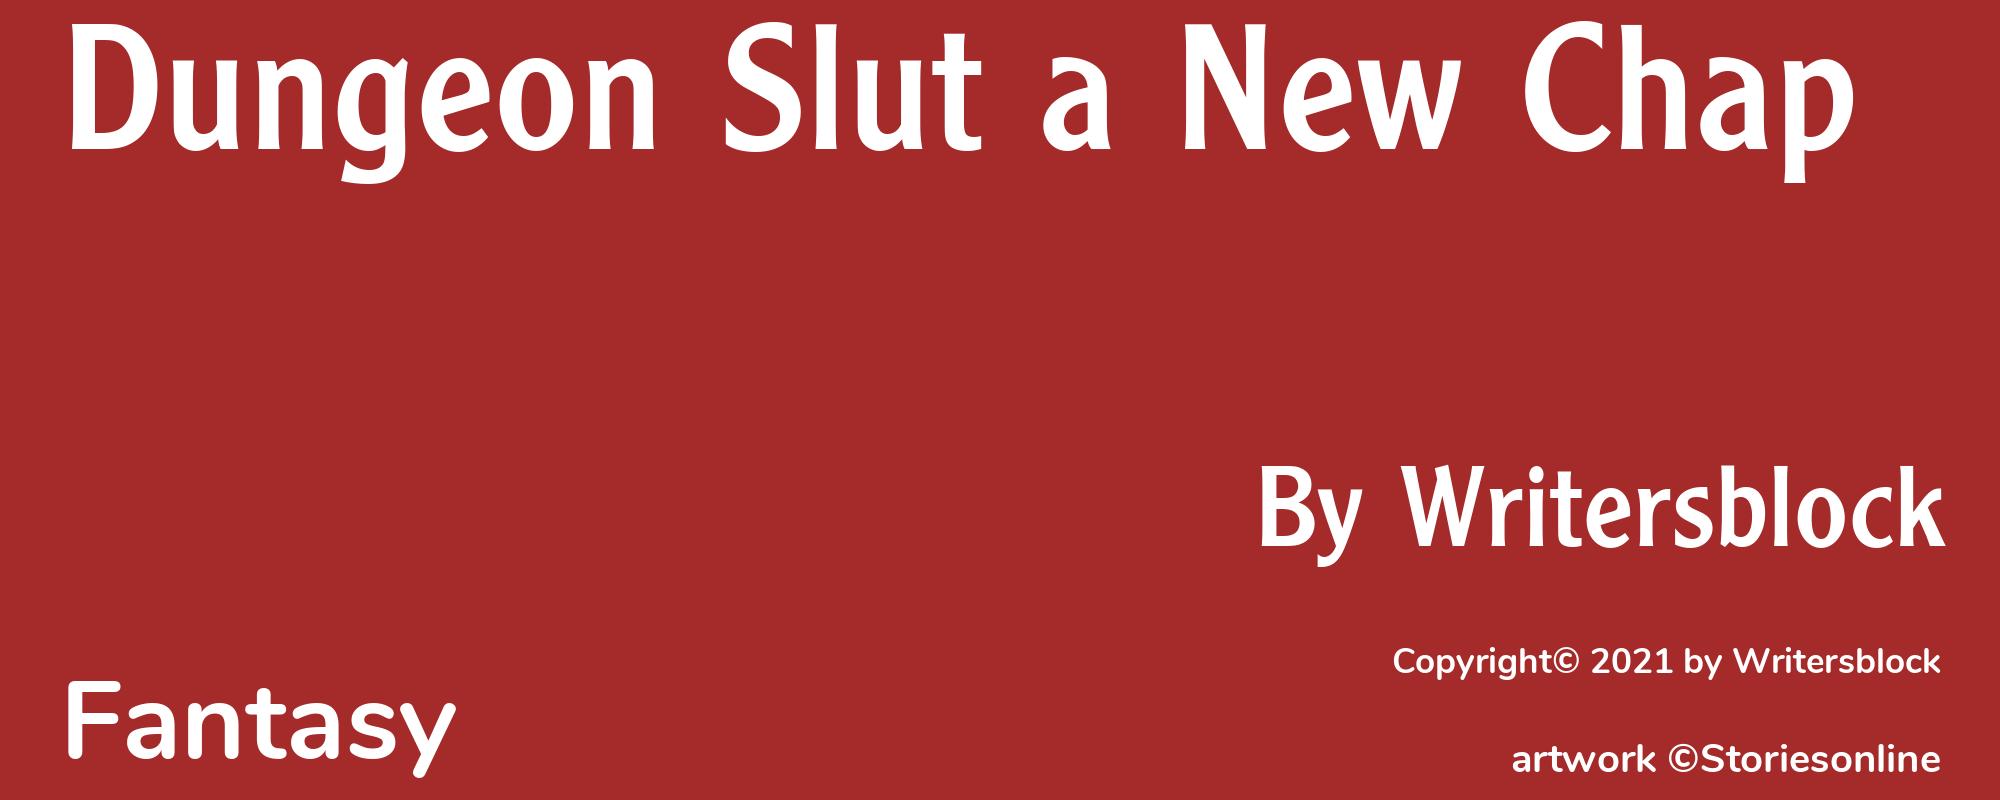 Dungeon Slut a New Chap - Cover